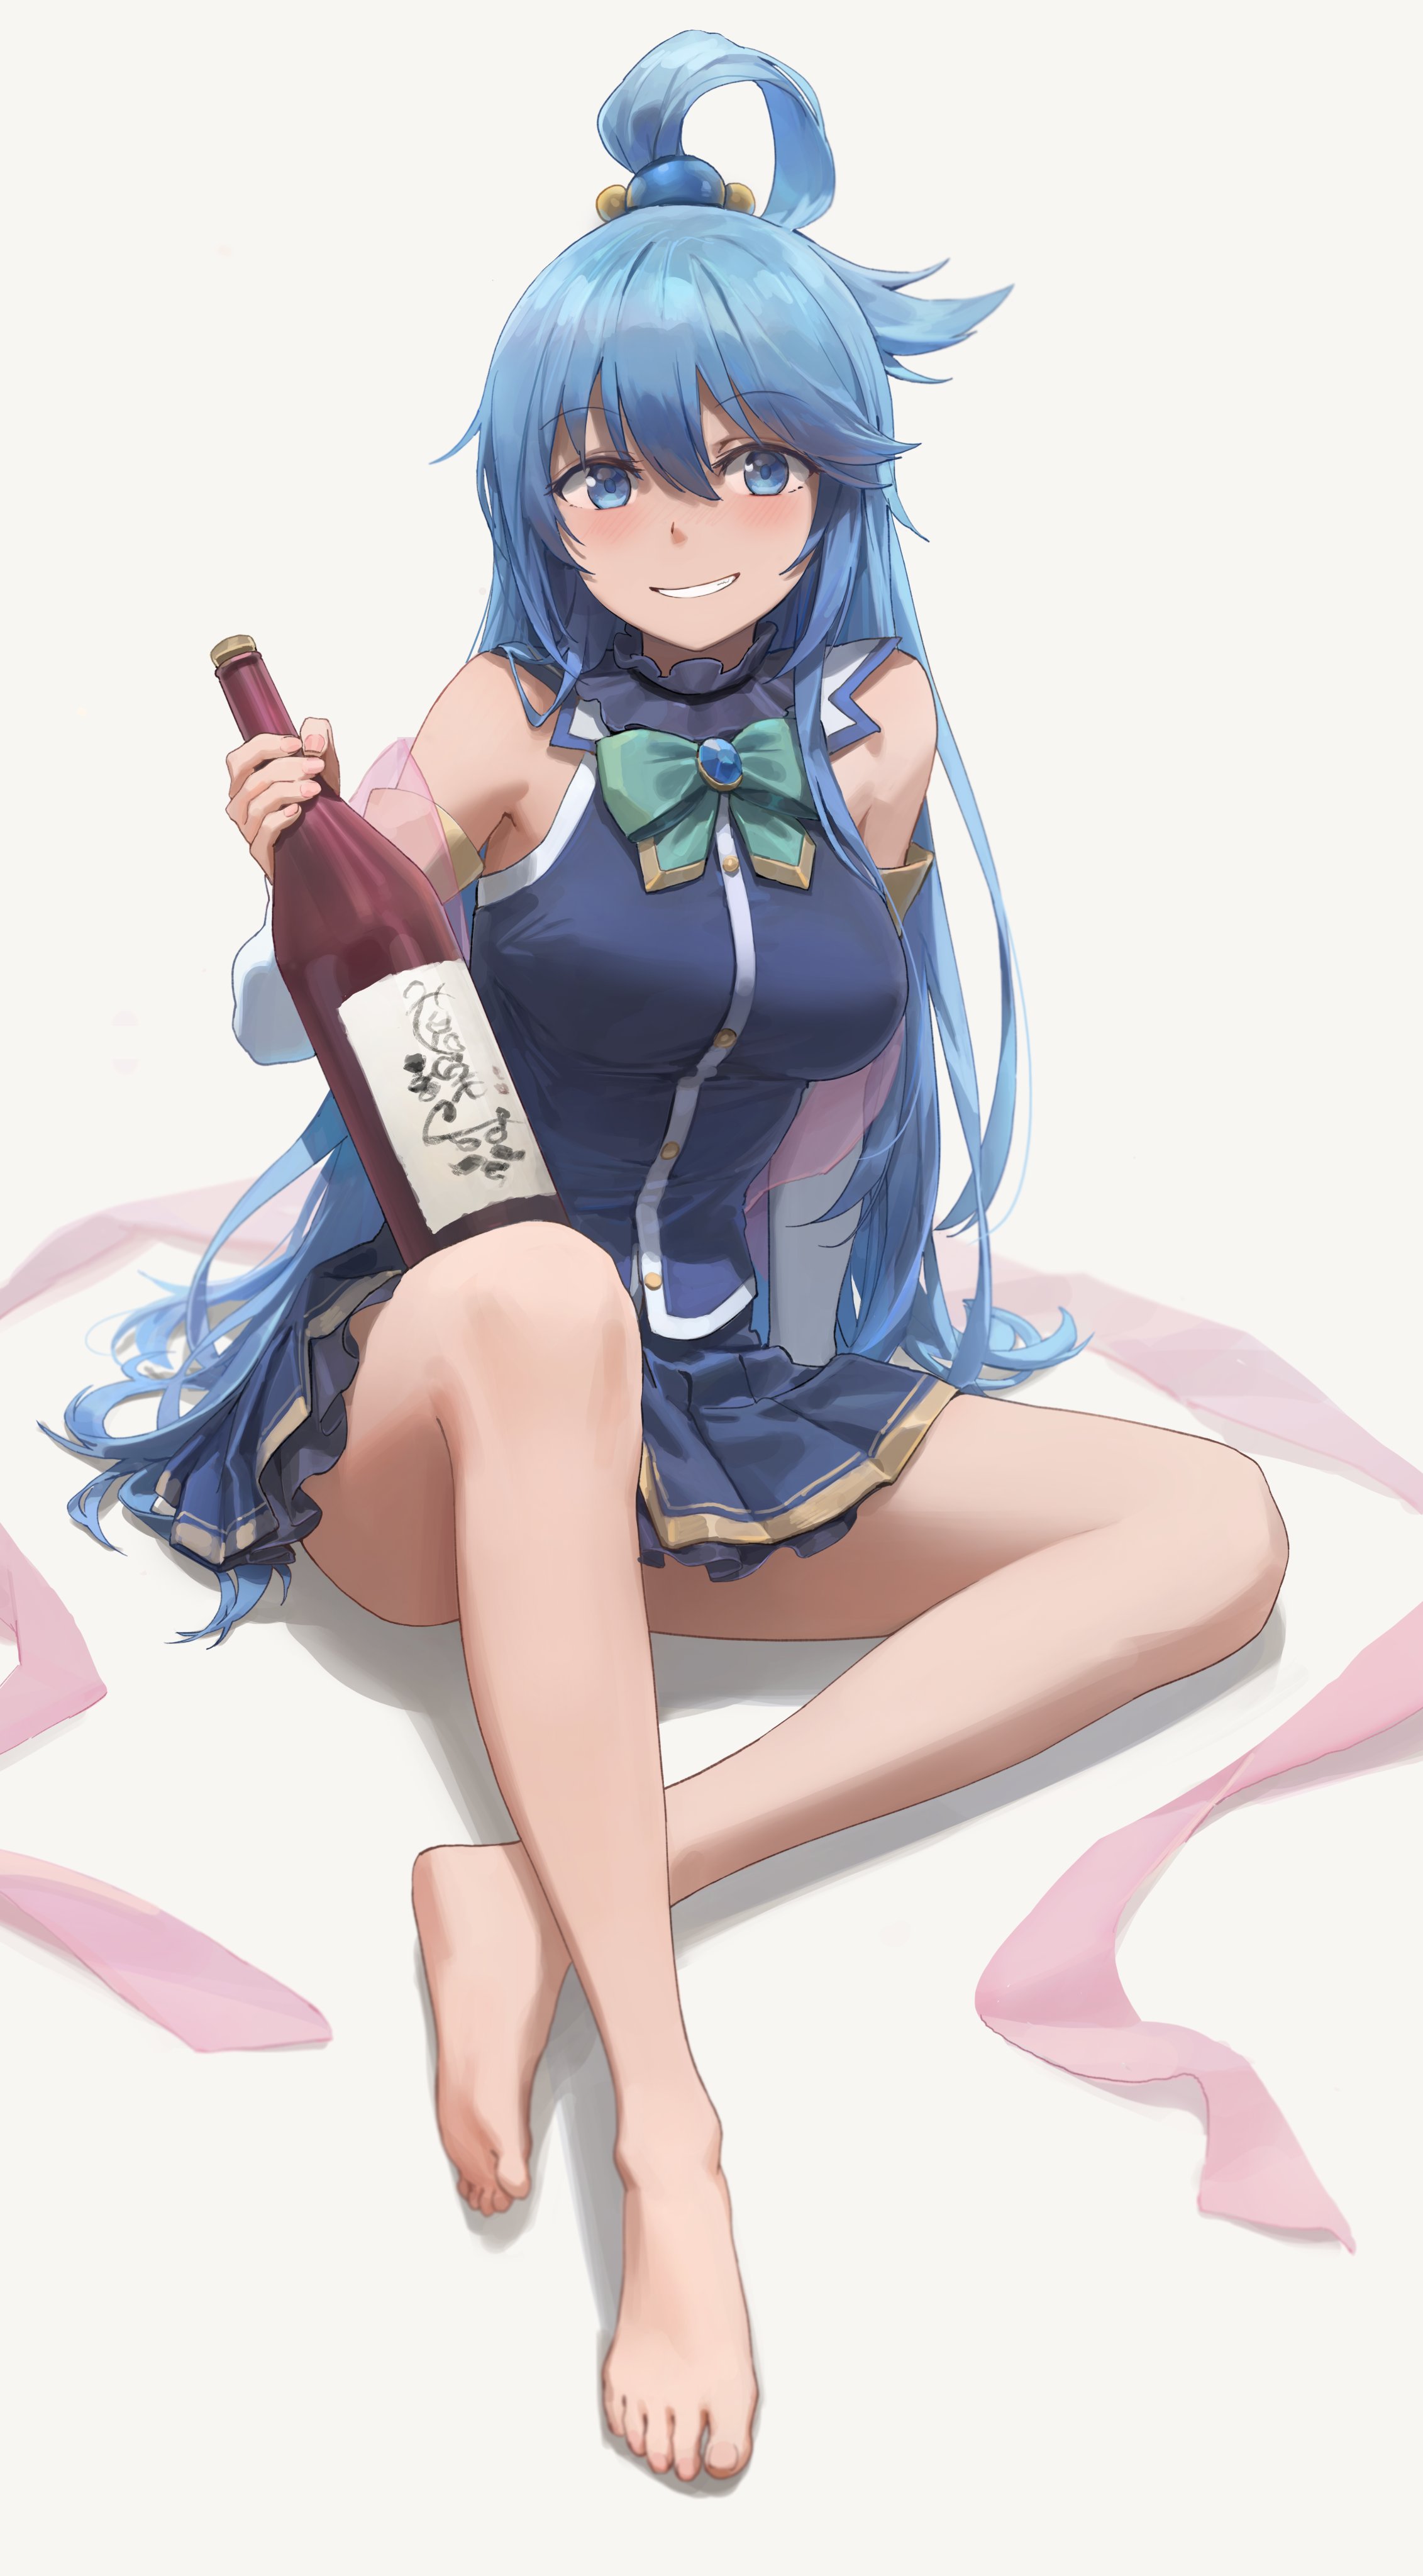 Anime 2263x4096 anime anime girls digital art artwork 2D portrait display Kono Subarashii Sekai ni Shukufuku wo! Aqua (KonoSuba) Yohan1754 blue hair blue eyes smiling dress barefoot